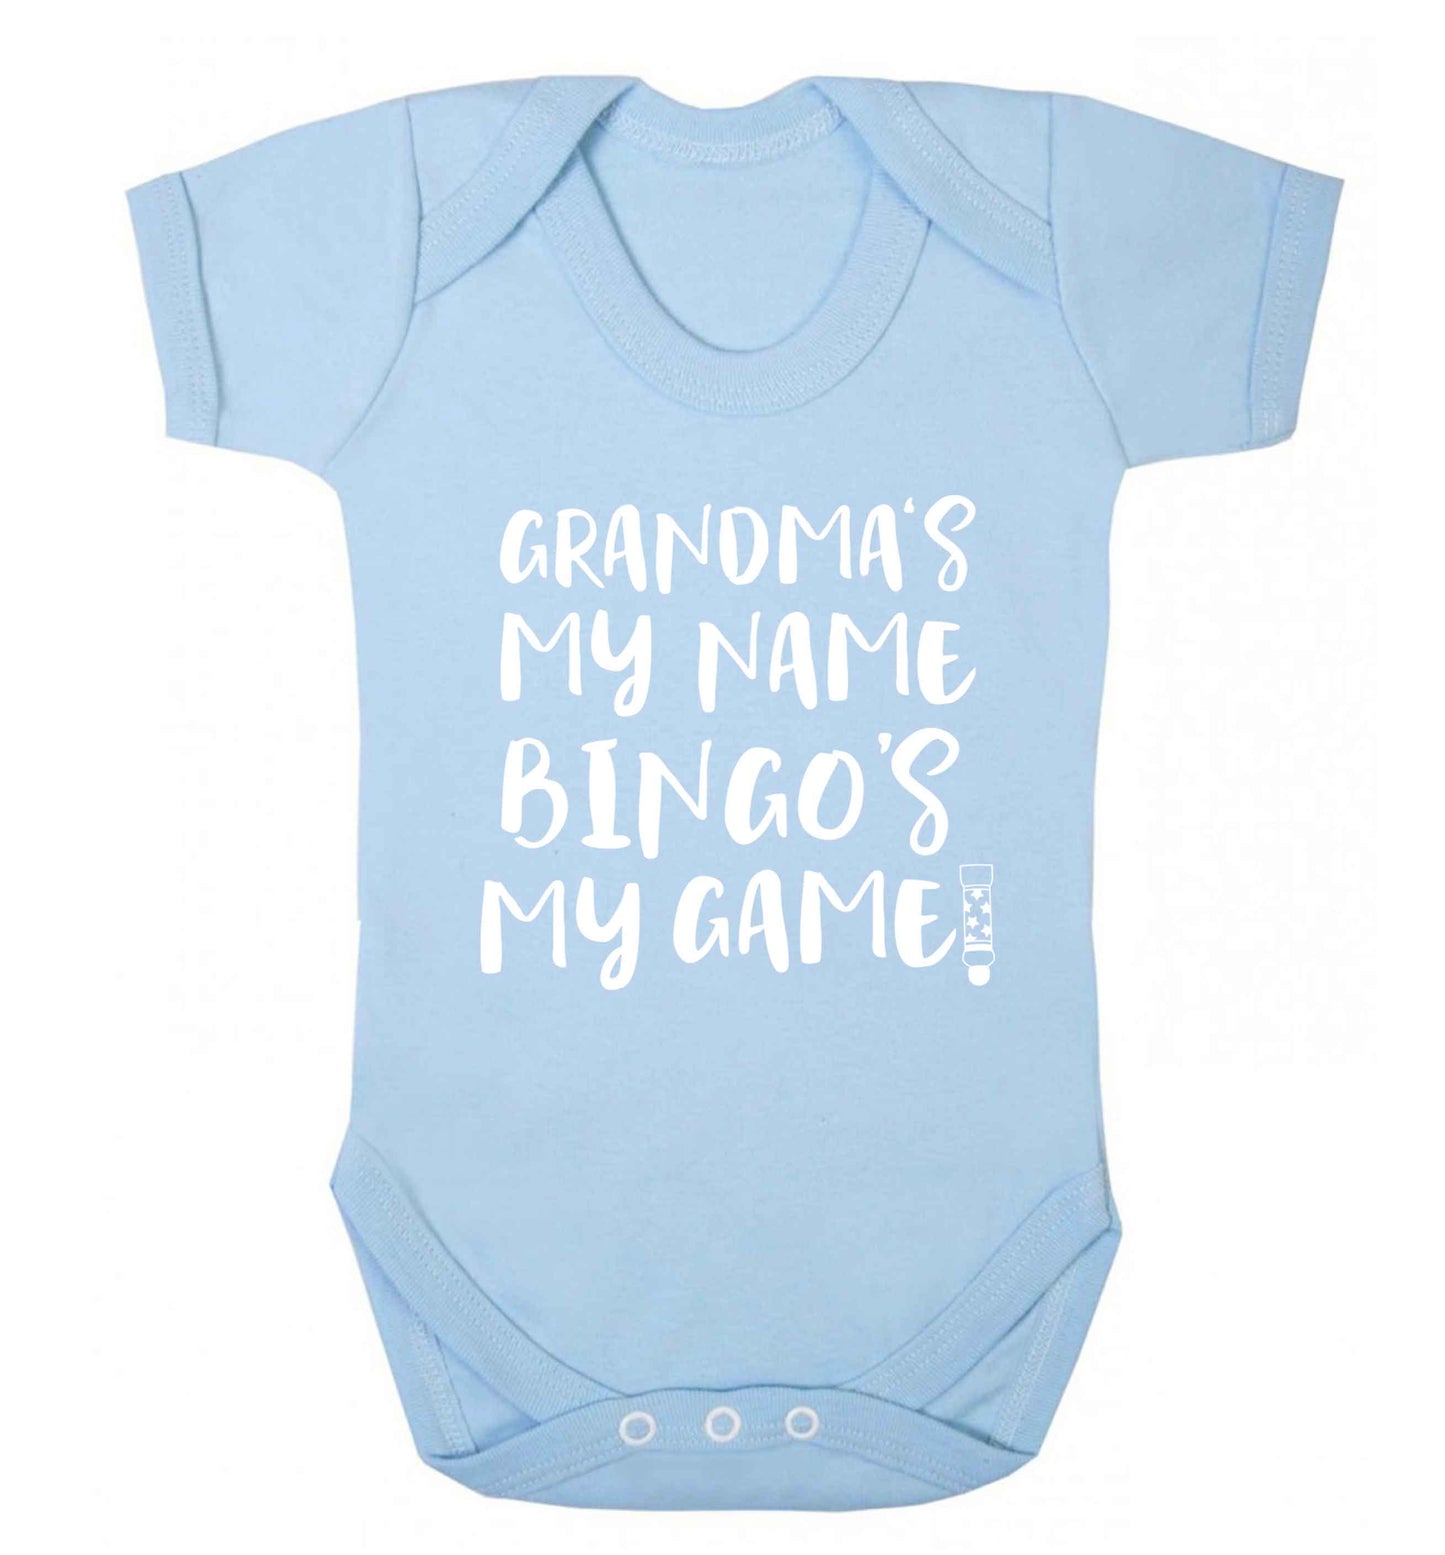 Grandma's my name bingo's my game! Baby Vest pale blue 18-24 months